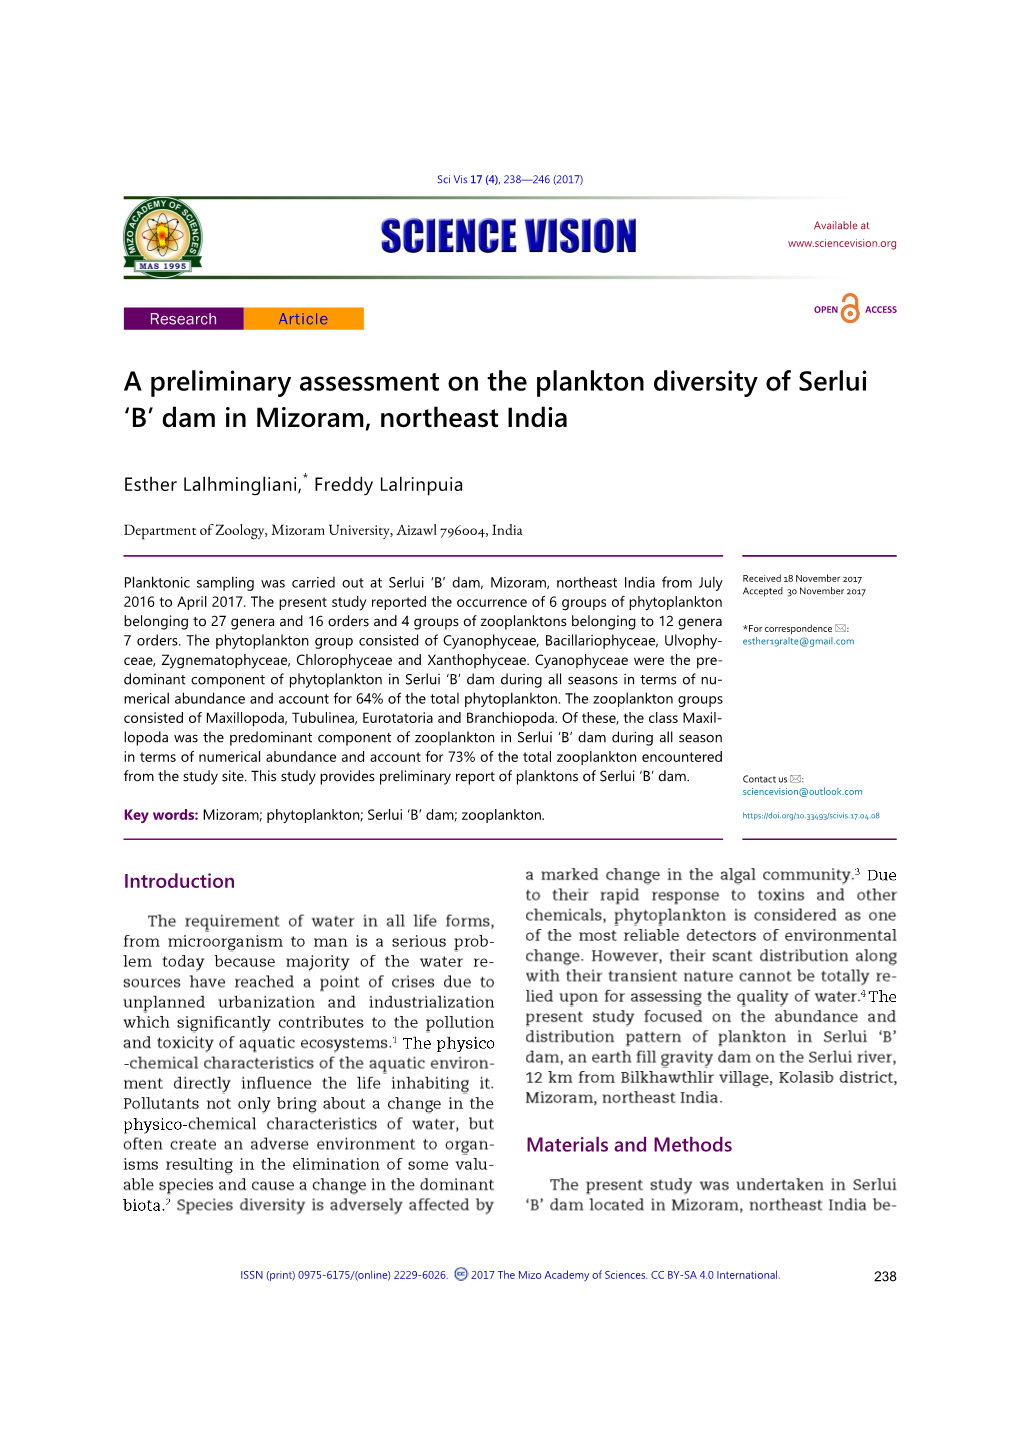 A Preliminary Assessment on the Plankton Diversity of Serlui 'B' Dam in Mizoram, Northeast India